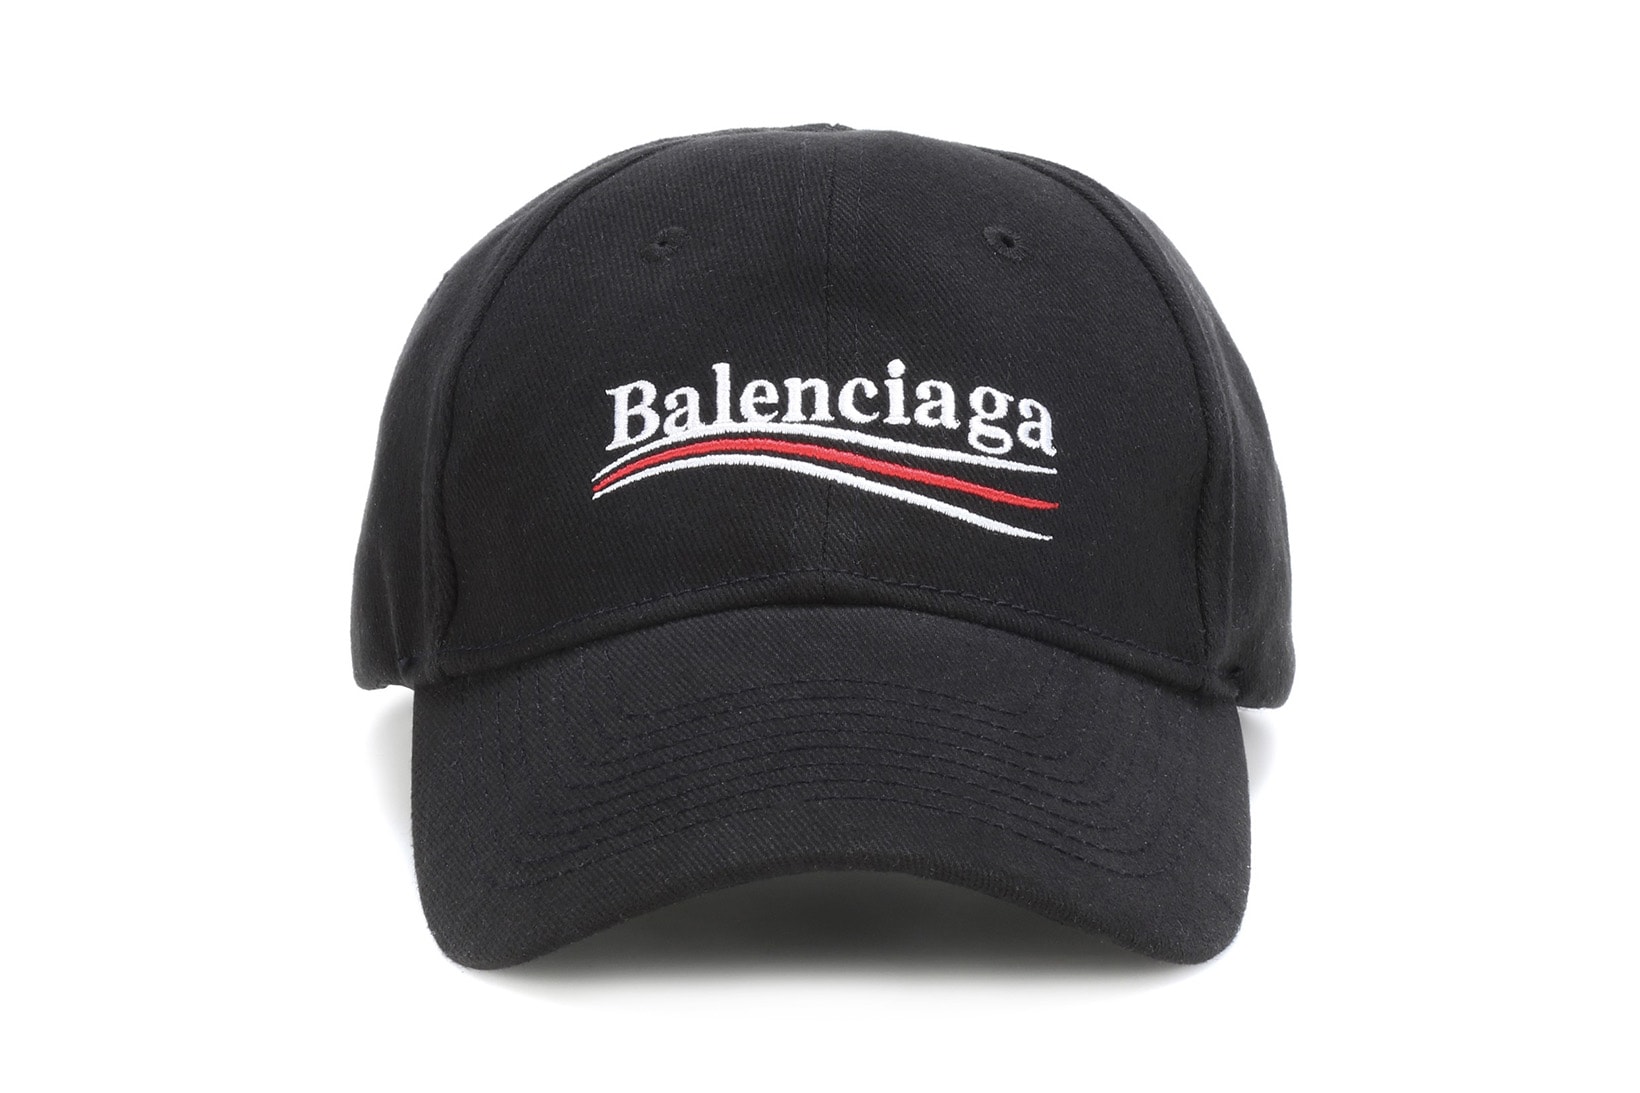 balenciaga demna gvasalia campaign logo baseball cap bernie sanders black white red where to buy